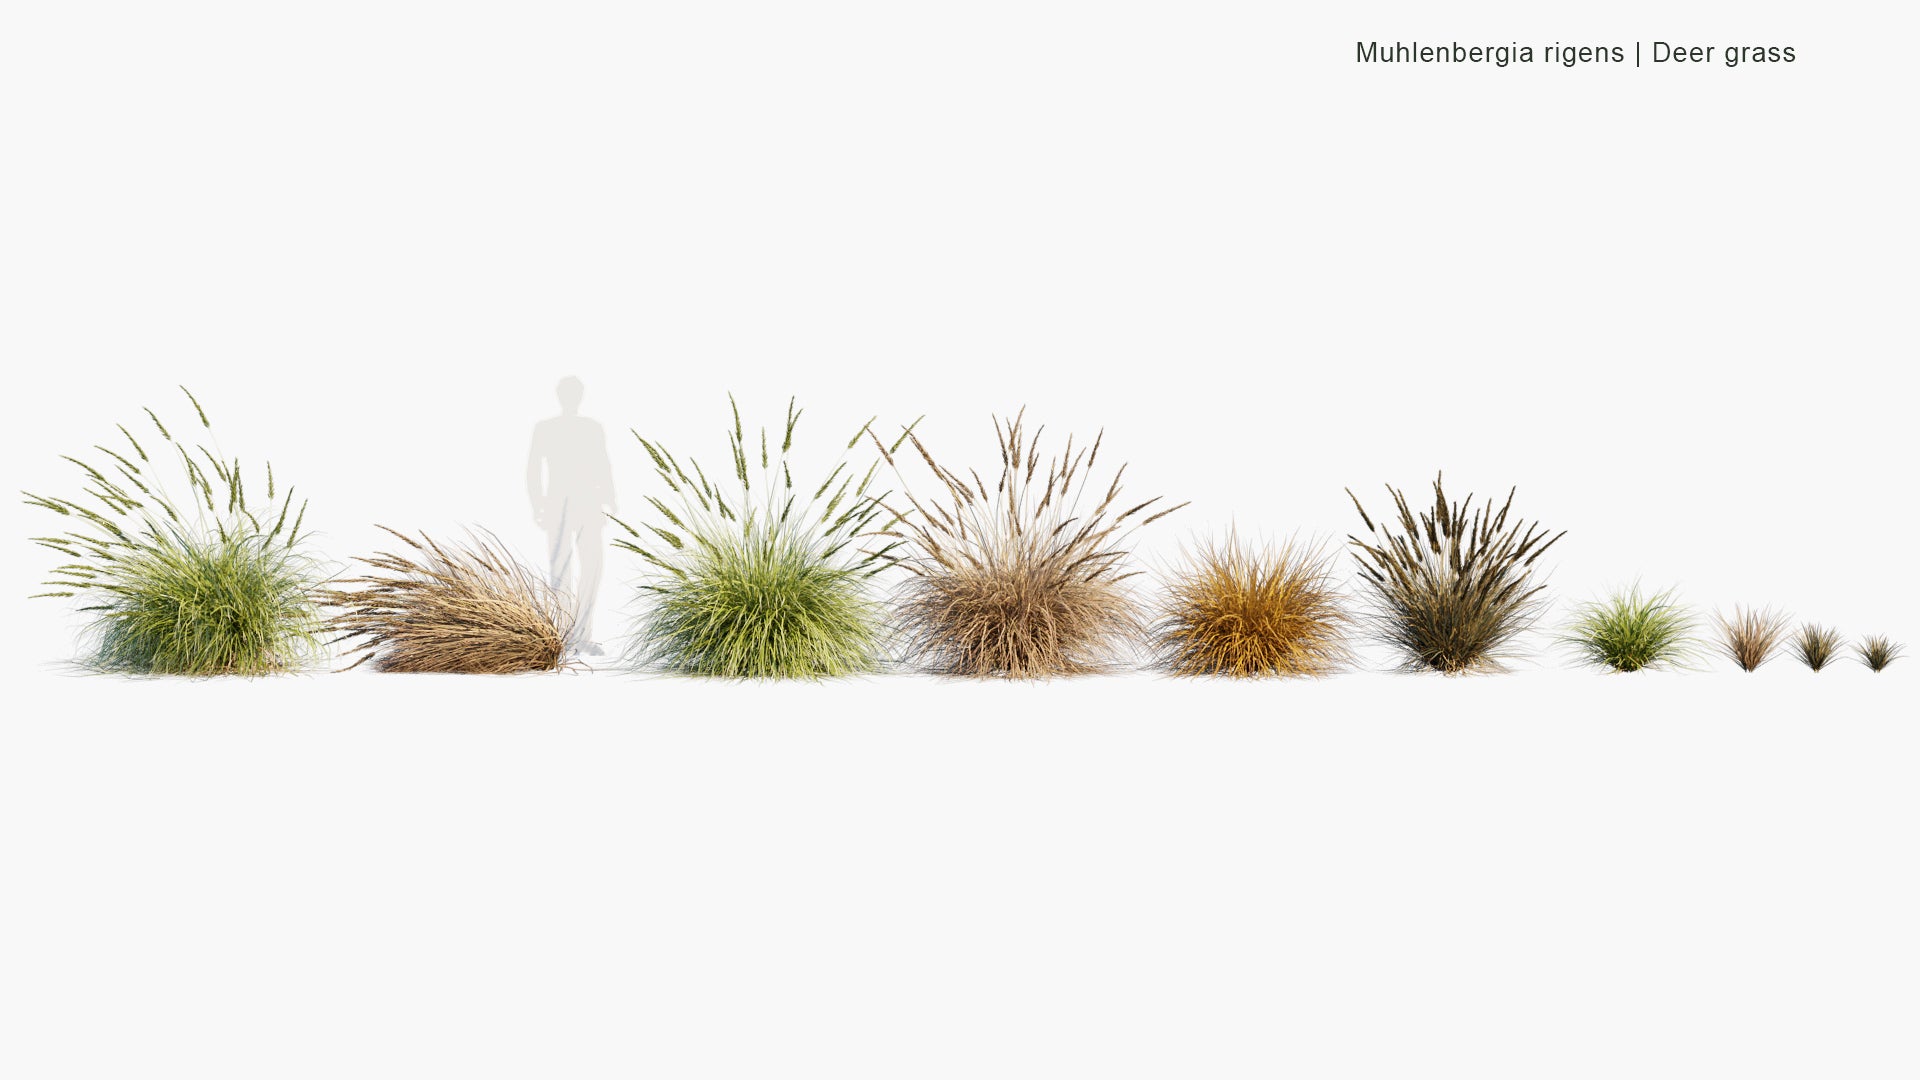 Low Poly Muhlenbergia Rigens - Deer Grass (3D Model)